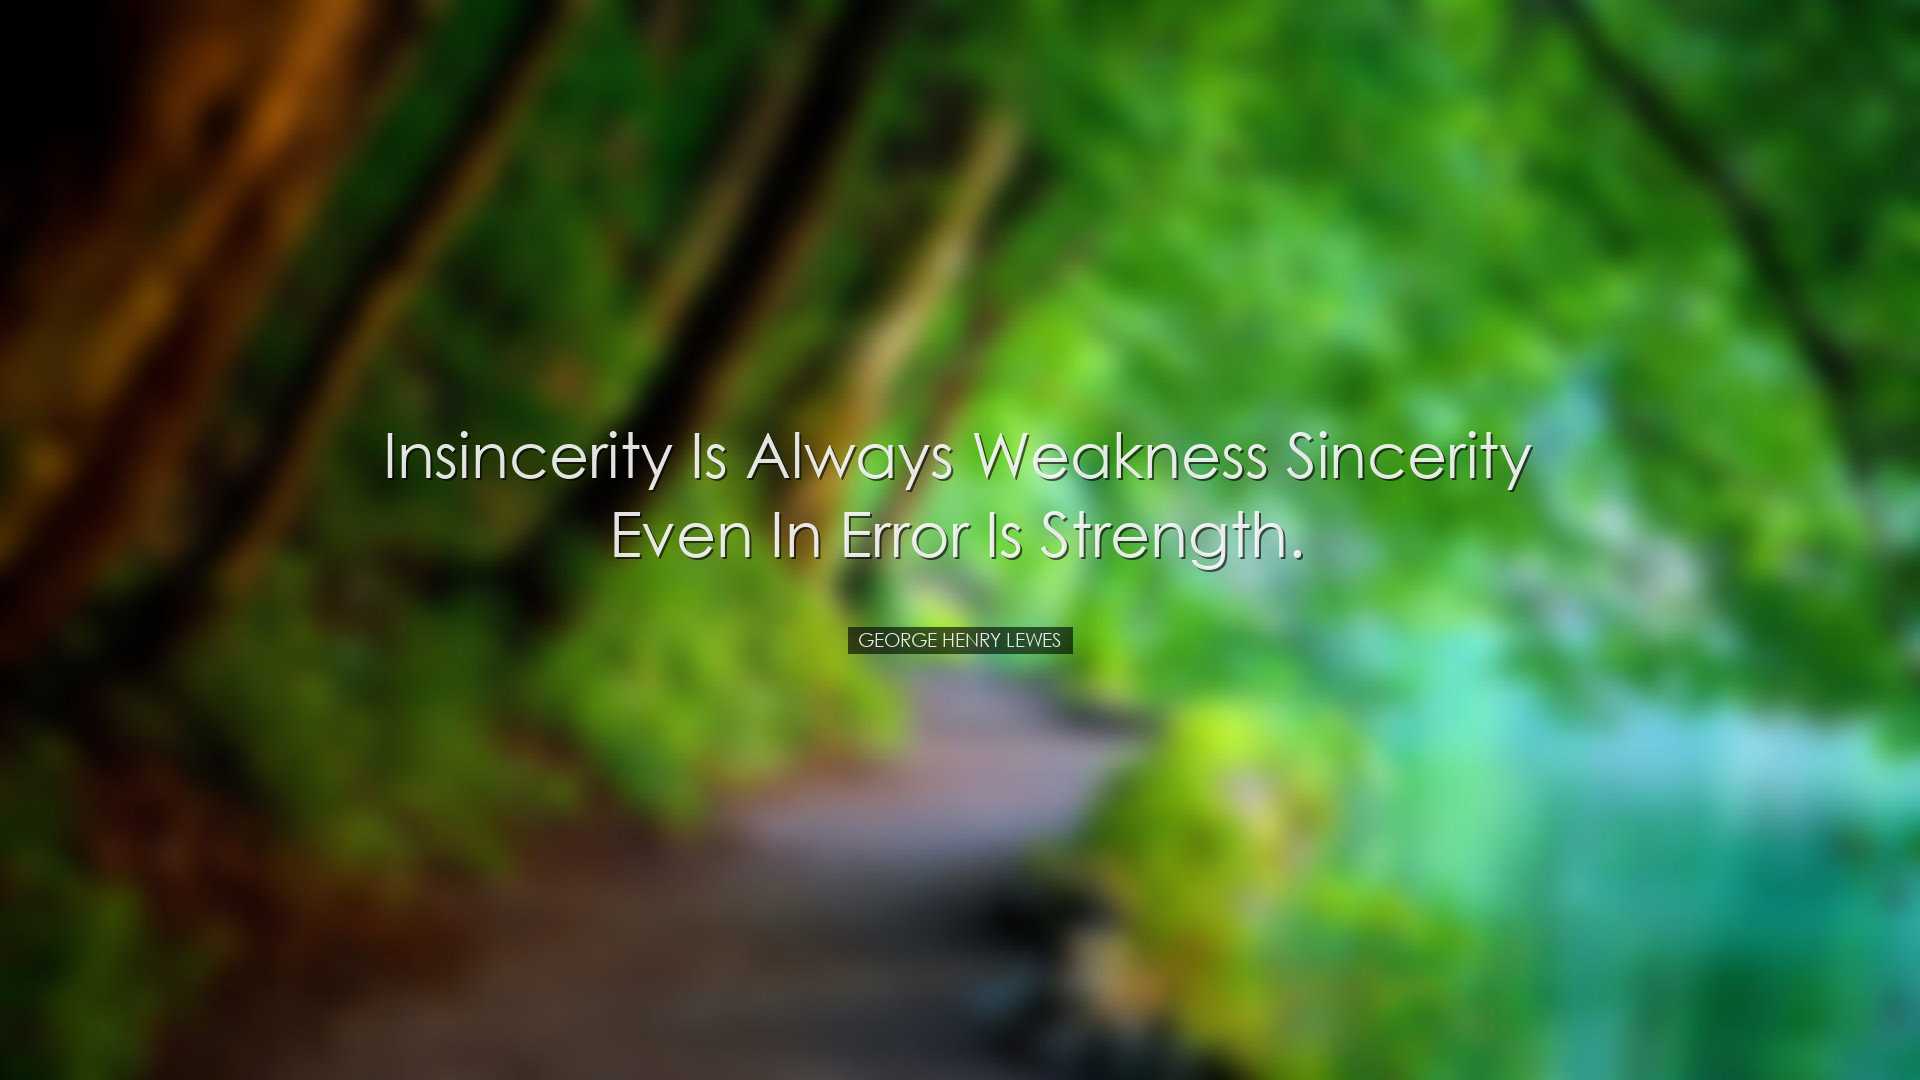 Insincerity is always weakness sincerity even in error is strength